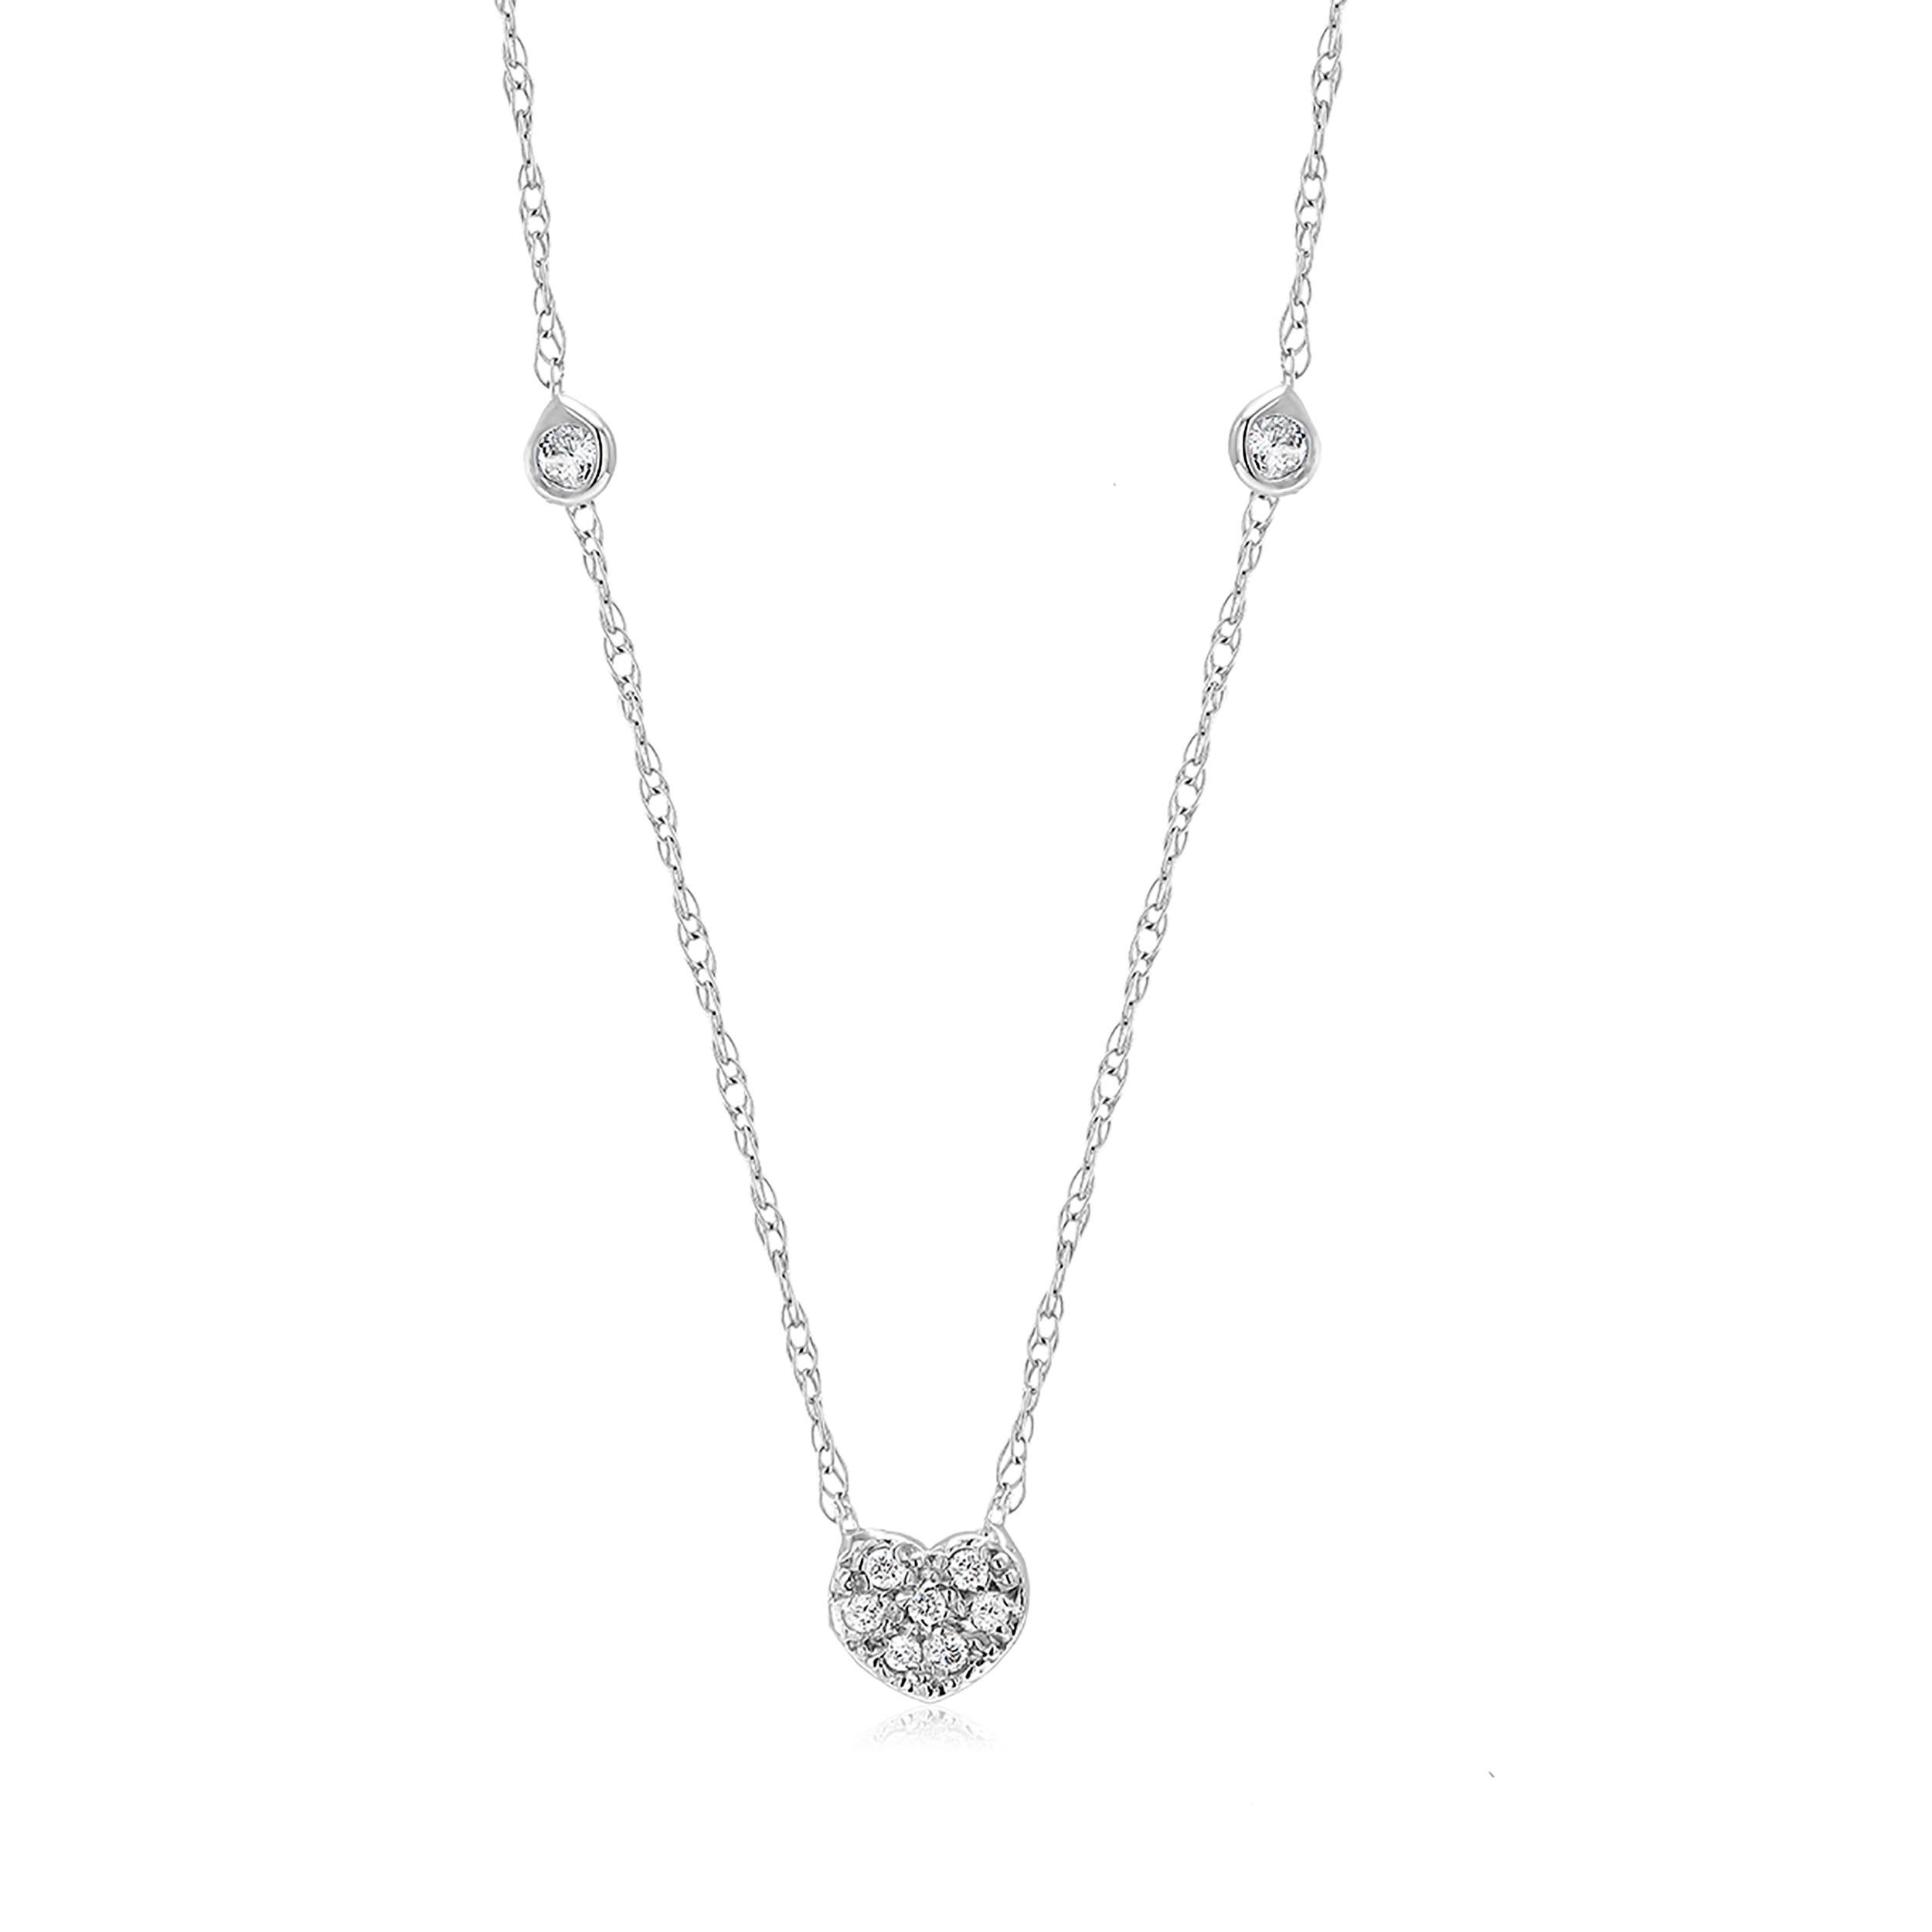 Women's or Men's Heart Shape Diamond Charm White Gold Necklace Pendant 